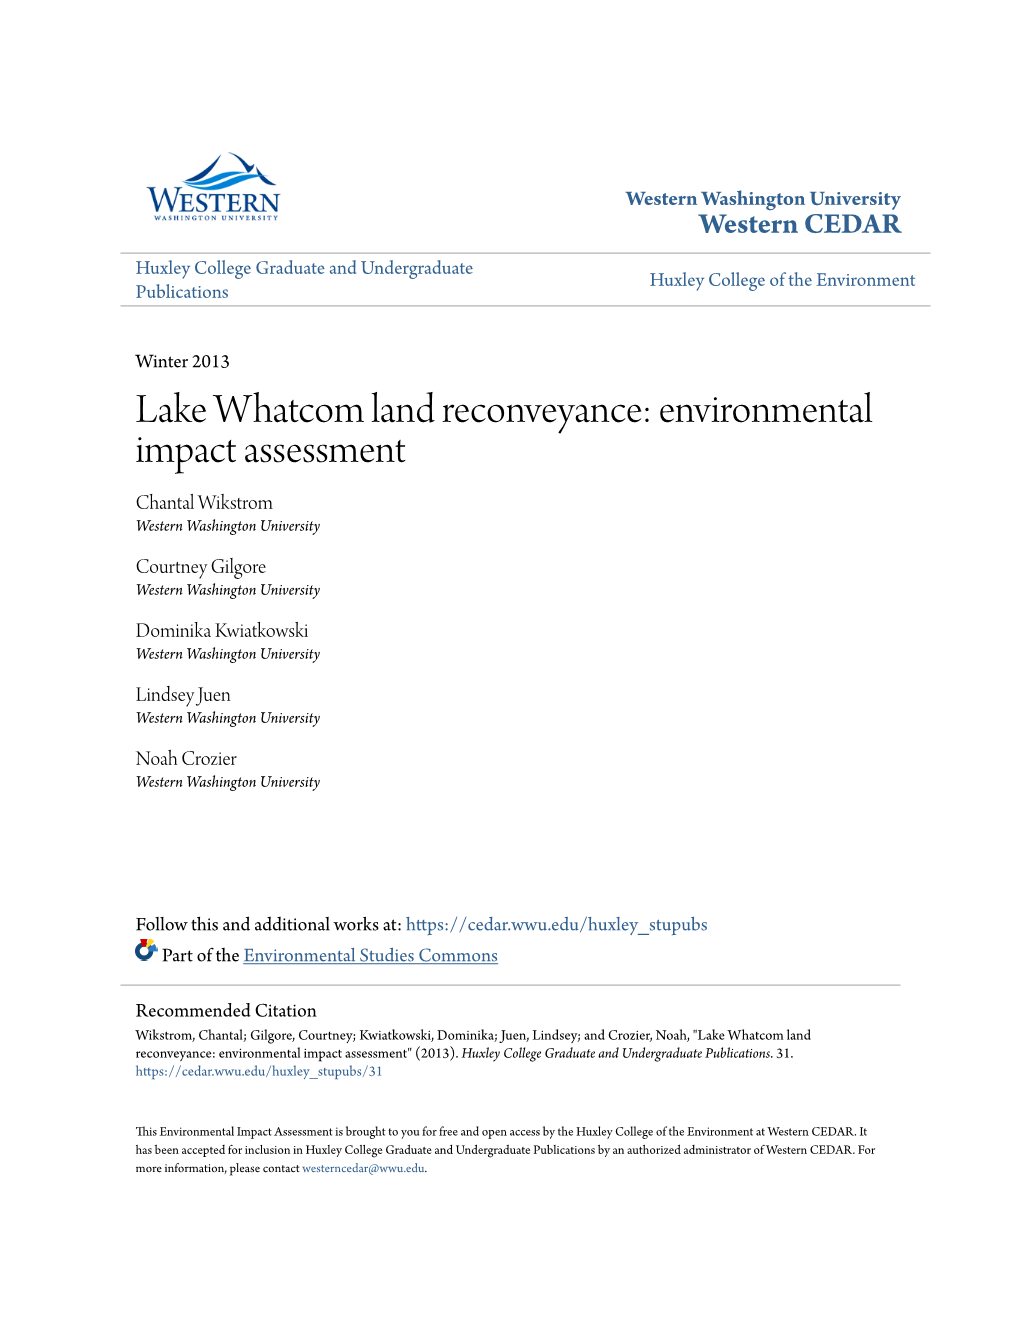 Lake Whatcom Land Reconveyance: Environmental Impact Assessment Chantal Wikstrom Western Washington University